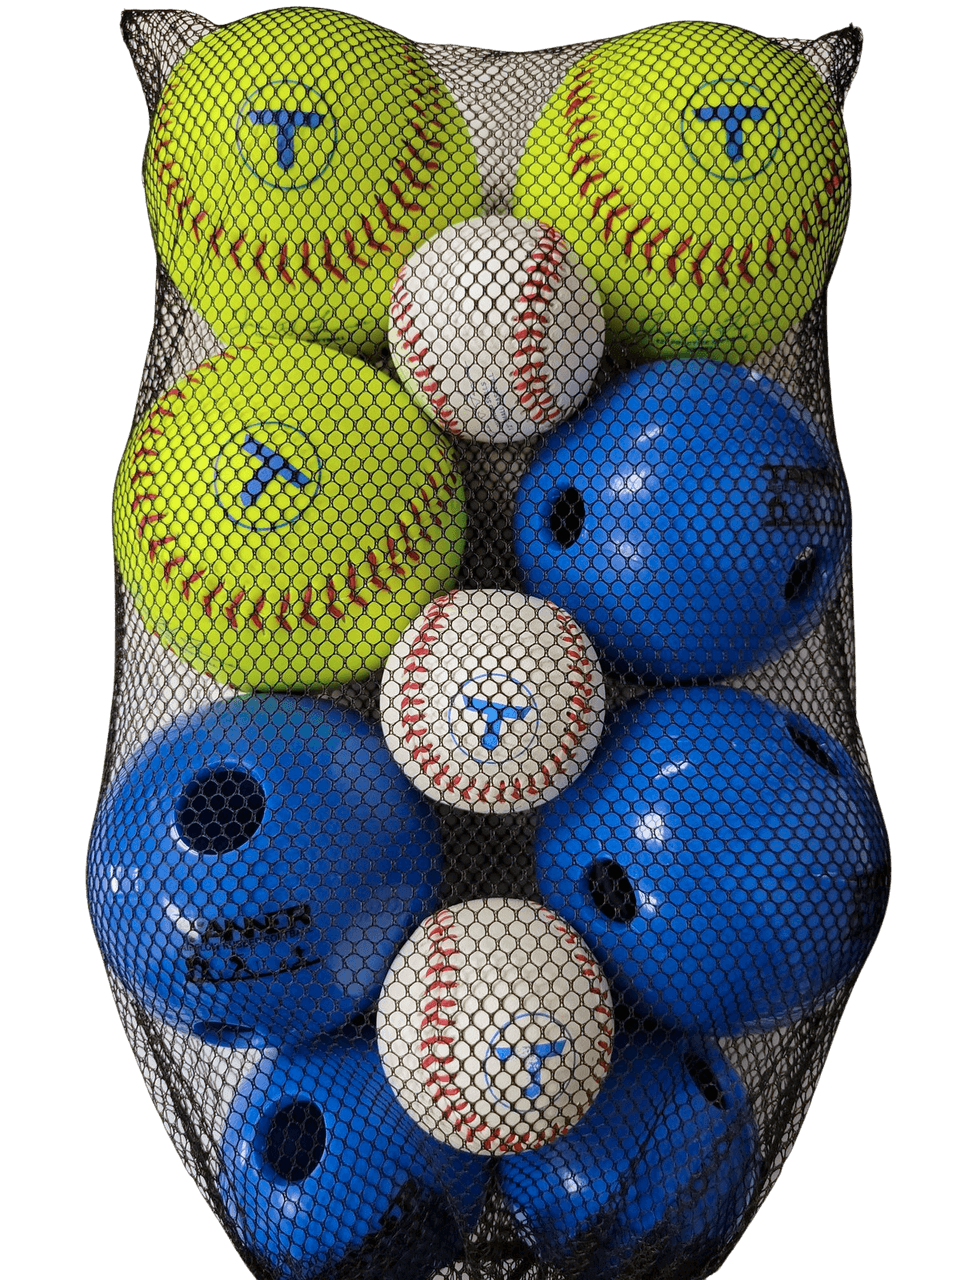 Ultimate Softball Bundle (Tanner Tee the Original) - Maximum Velocity Sports